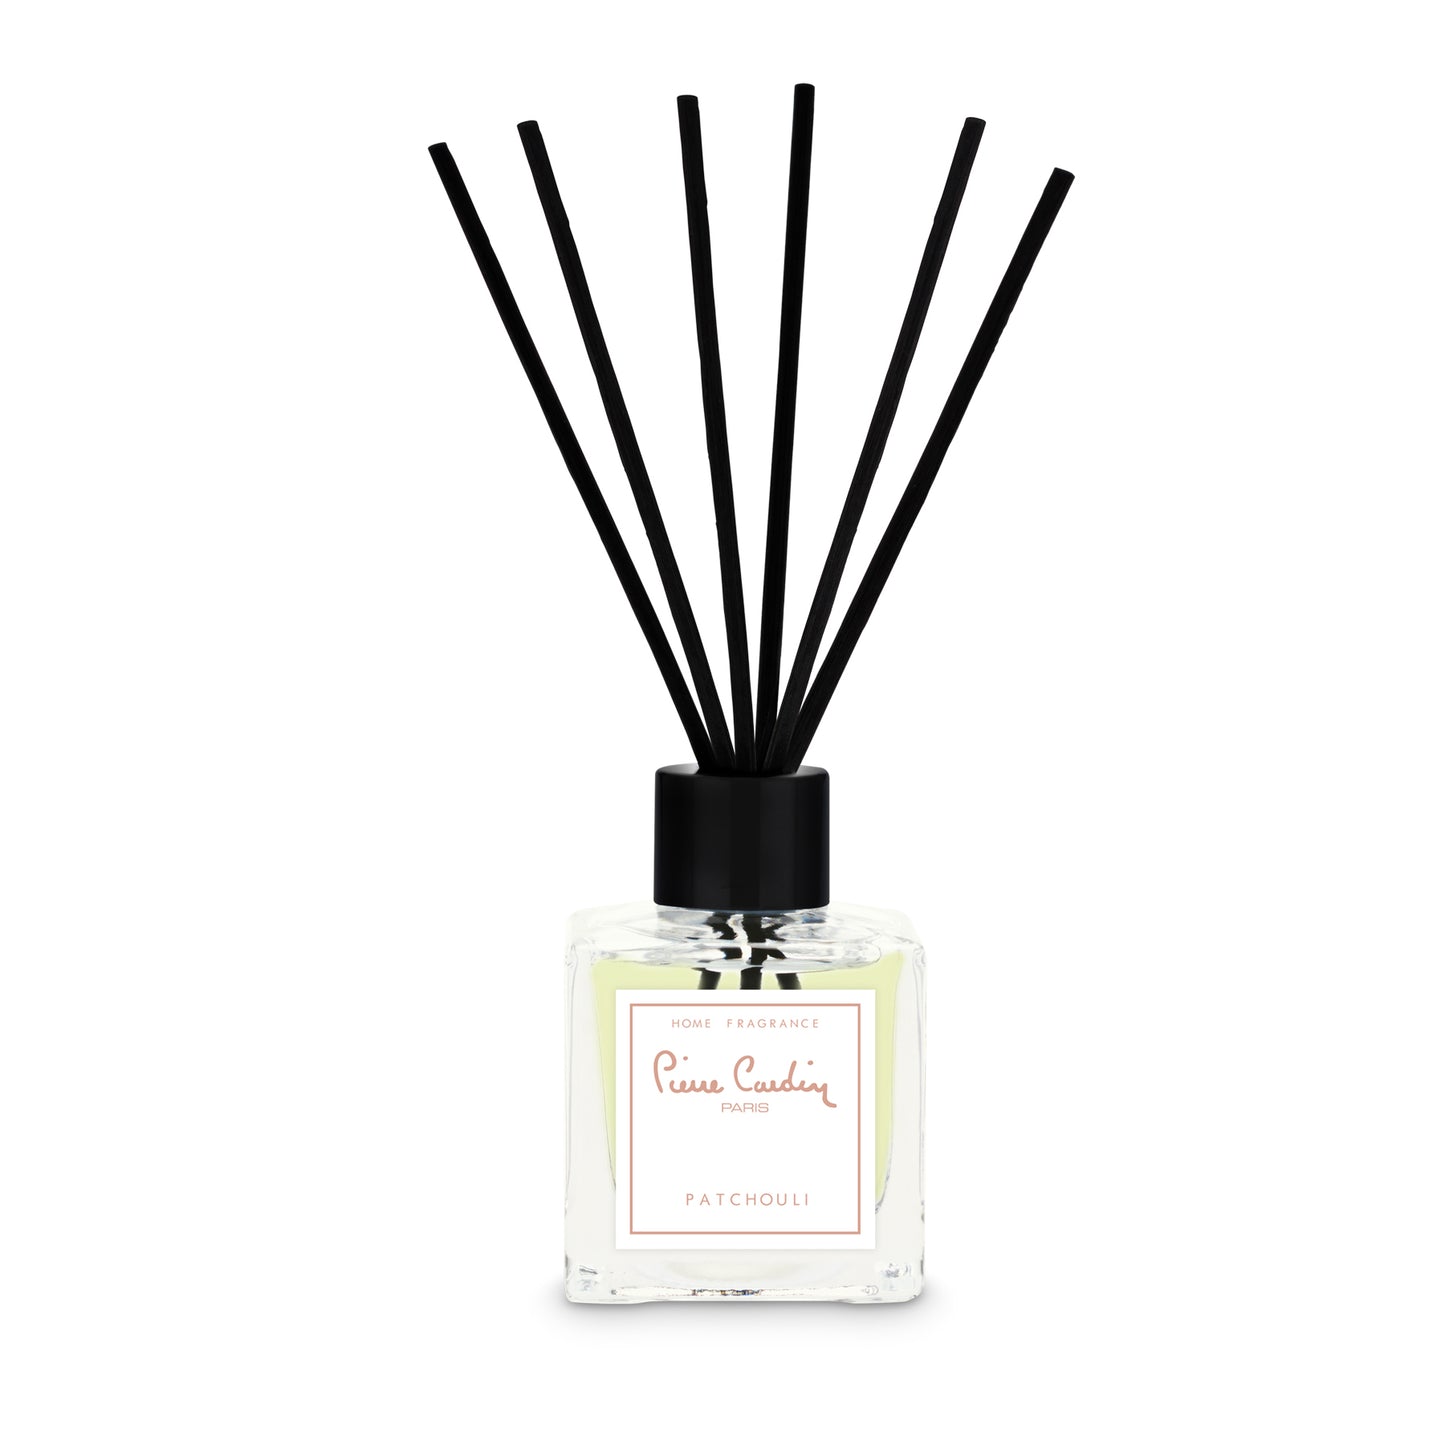 Pierre Cardin Home Fragrance  - PATCHOULI  100 ml